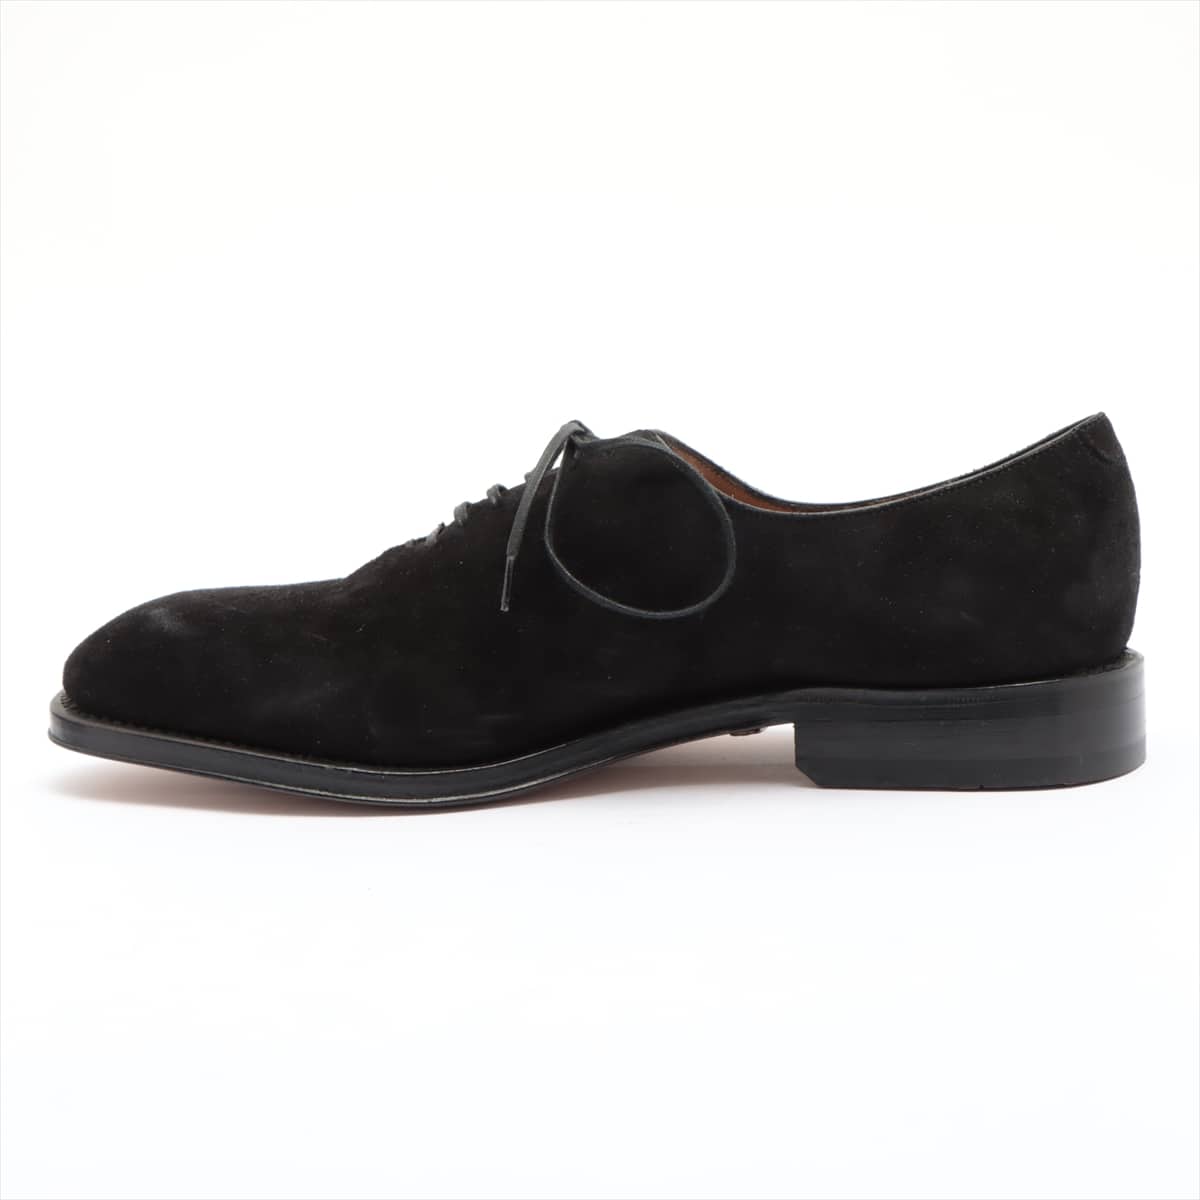 Ferragamo Suede Dress shoes 6EE Men's Black Resoled